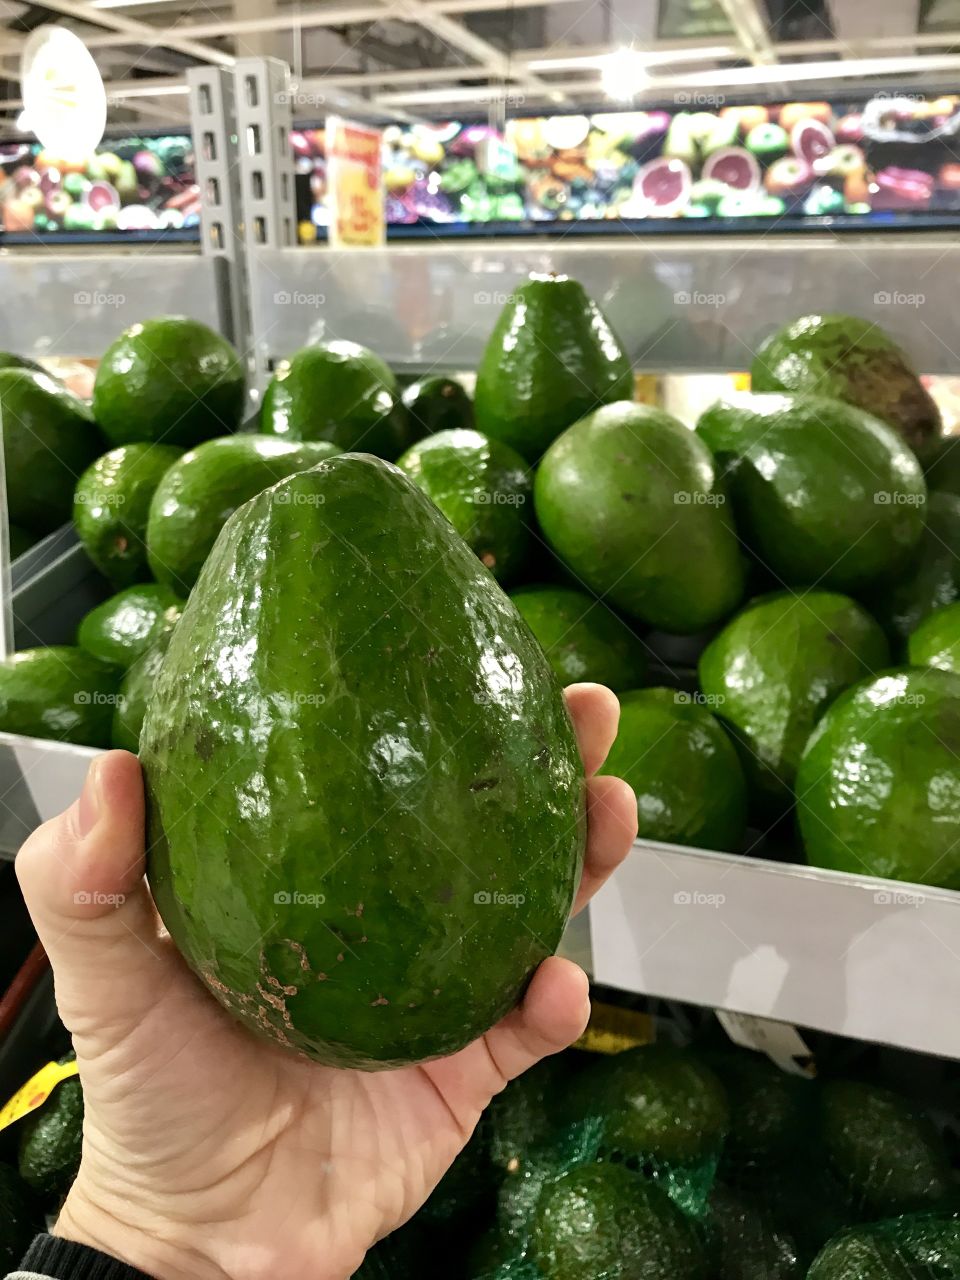 Large avocado pear